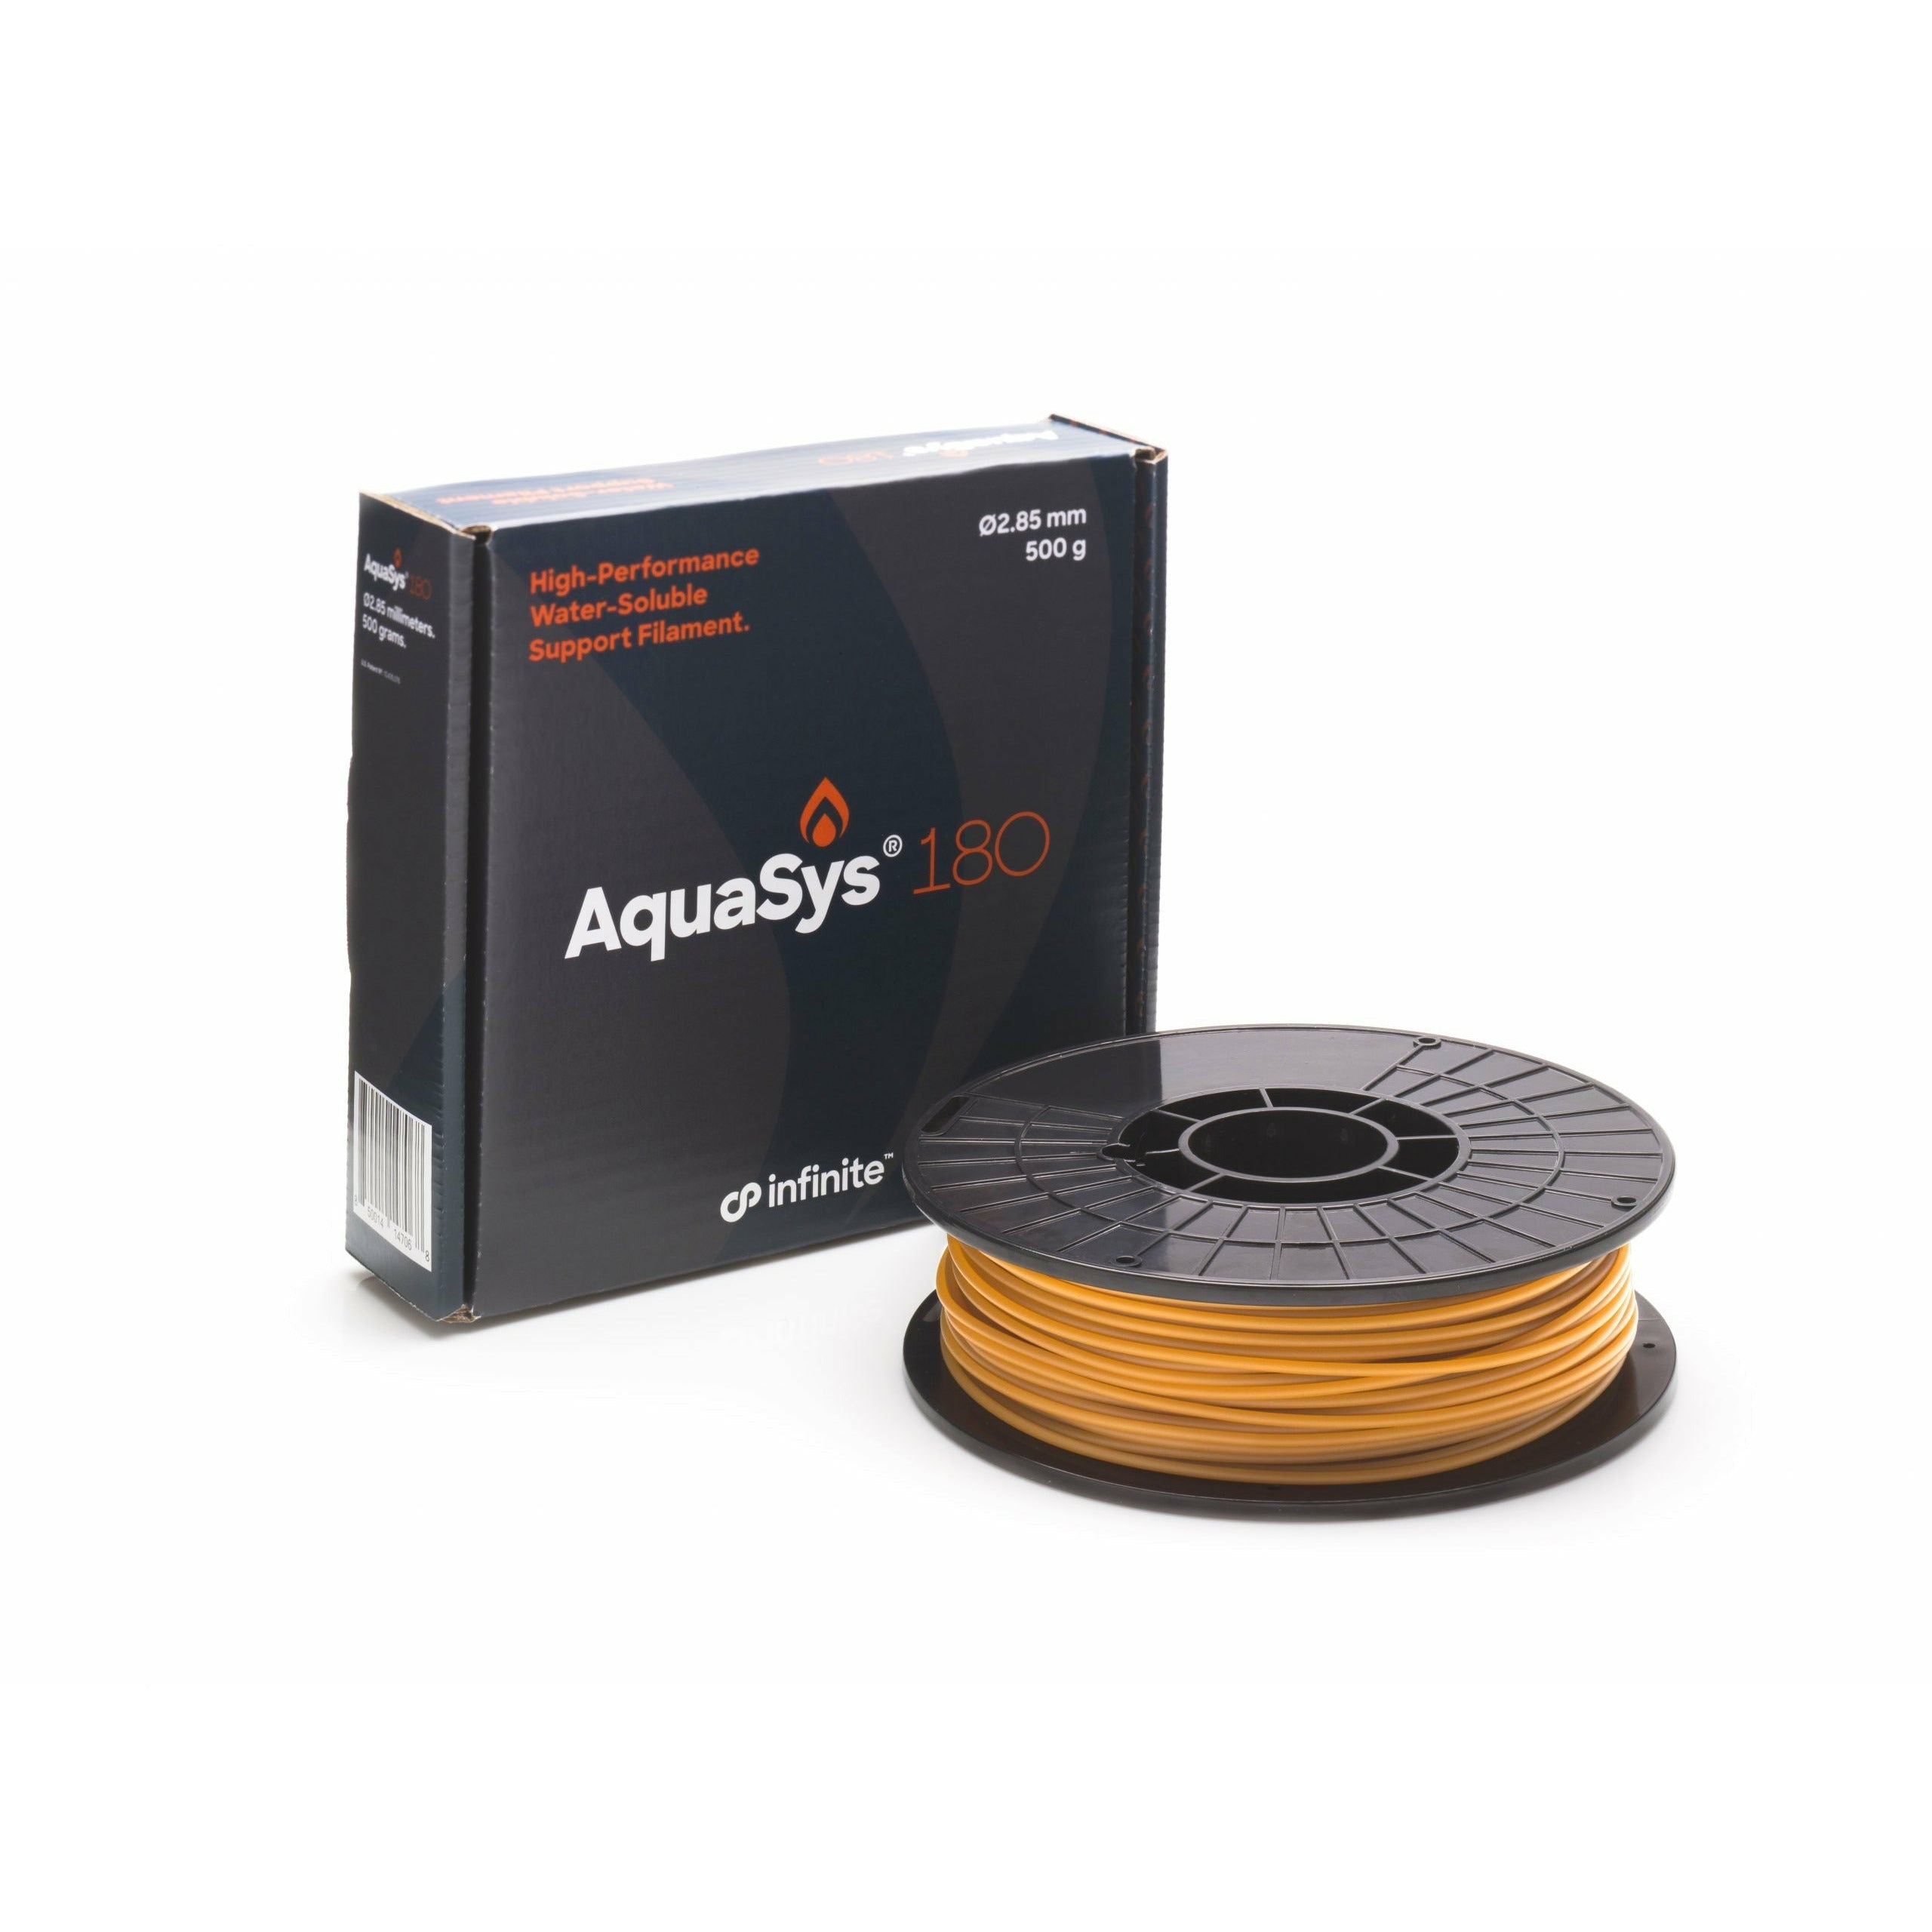 aquasys-180-filament-infinite-material-solutions-285mm-500g-natural-indicate-technologies-558531